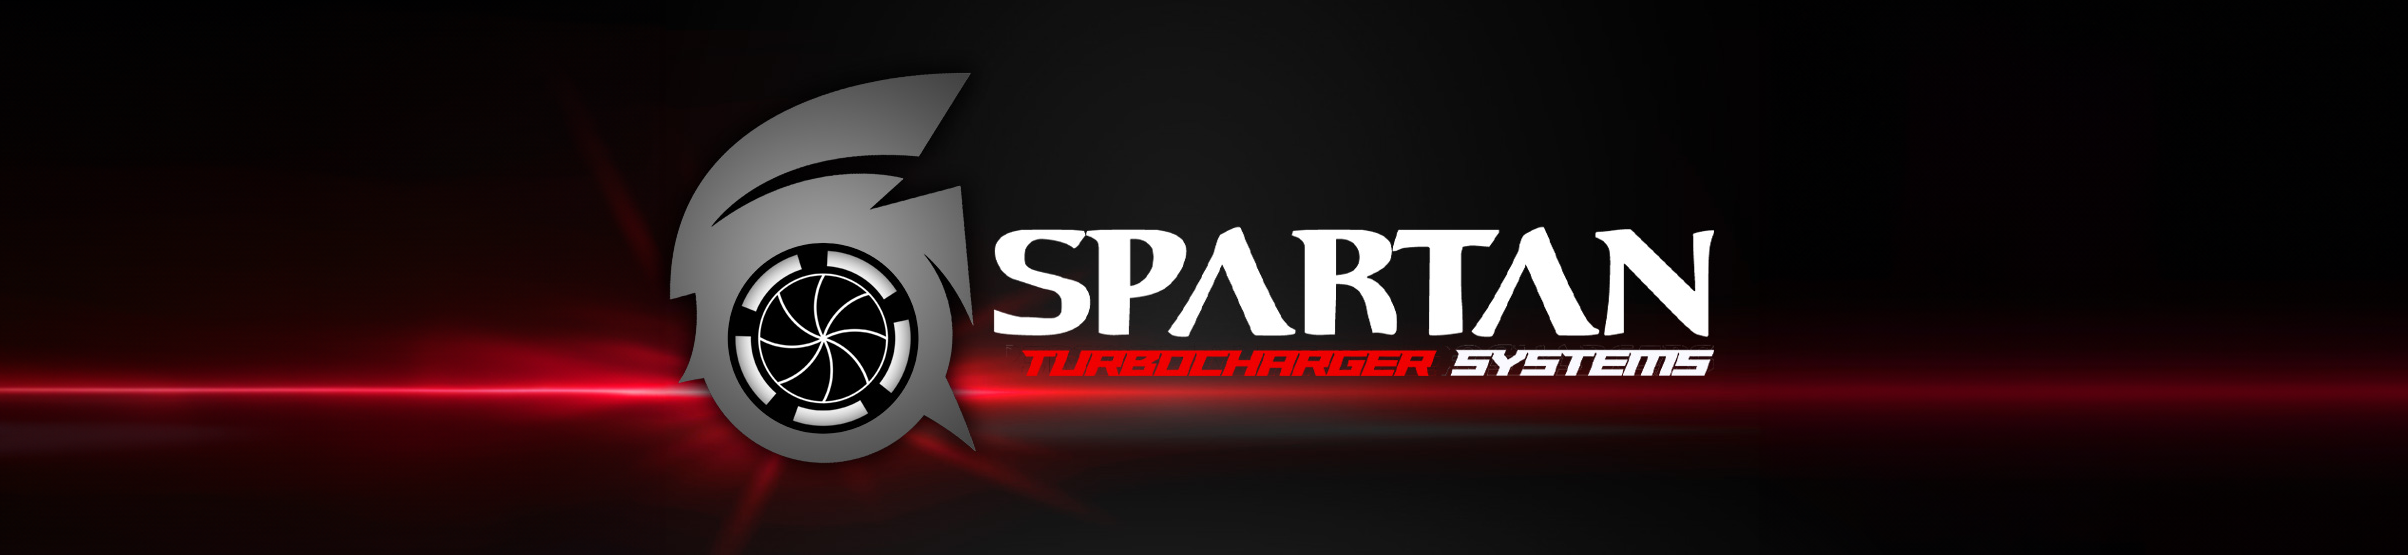 Spartan Turbocharger Systems